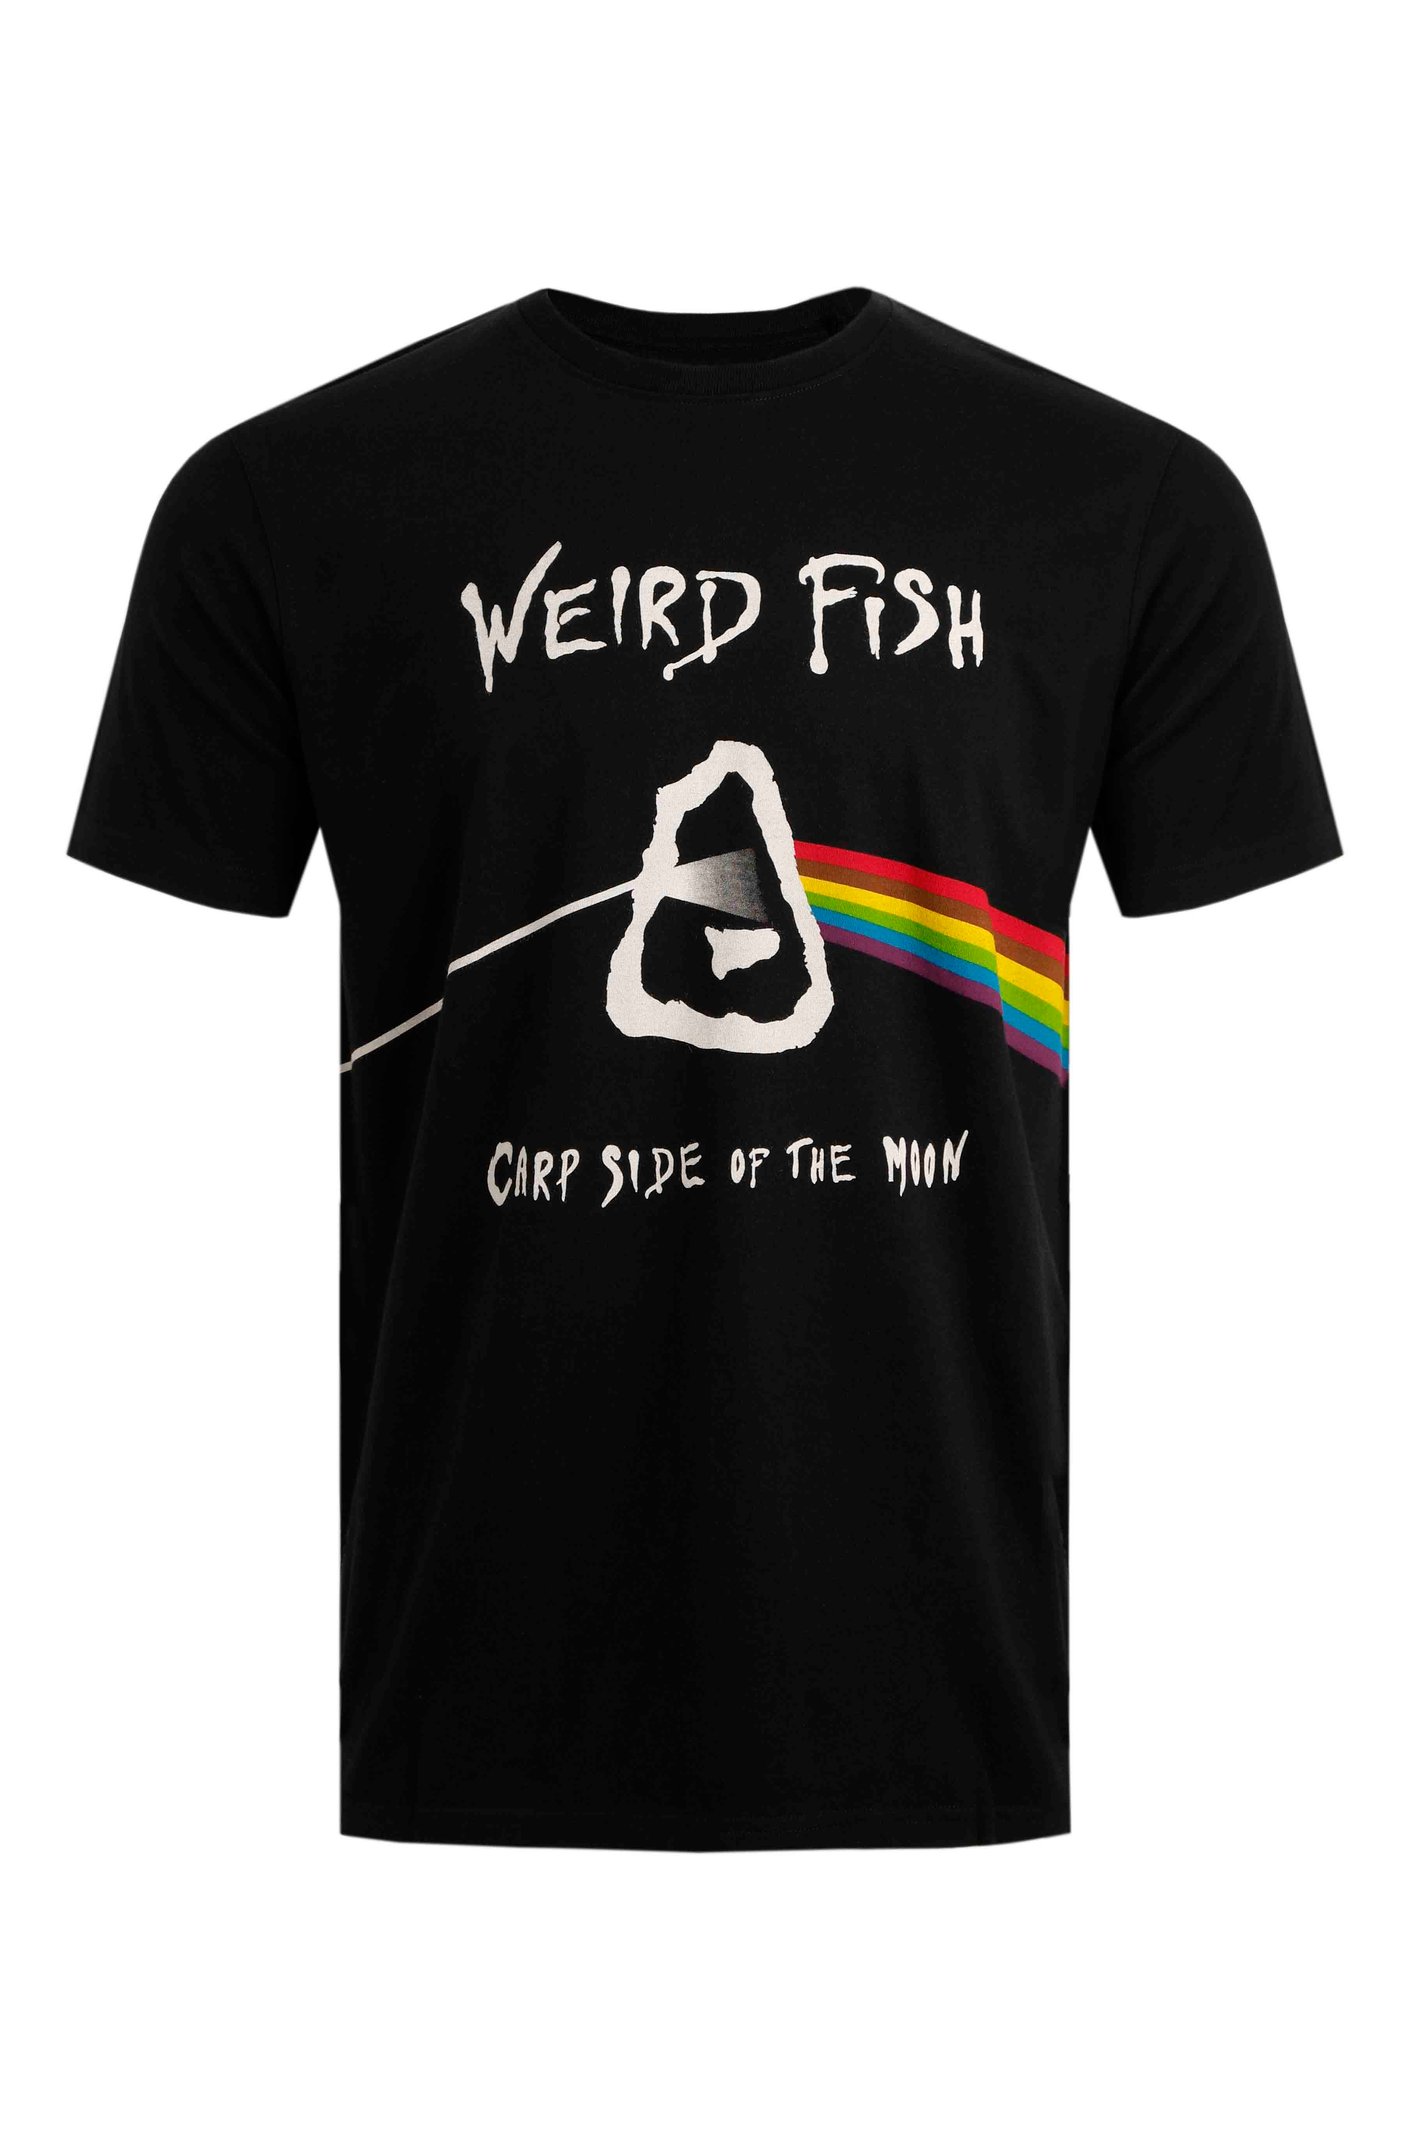 Weird Fish Carp Side Heritage Artist T-Shirt Black Size S